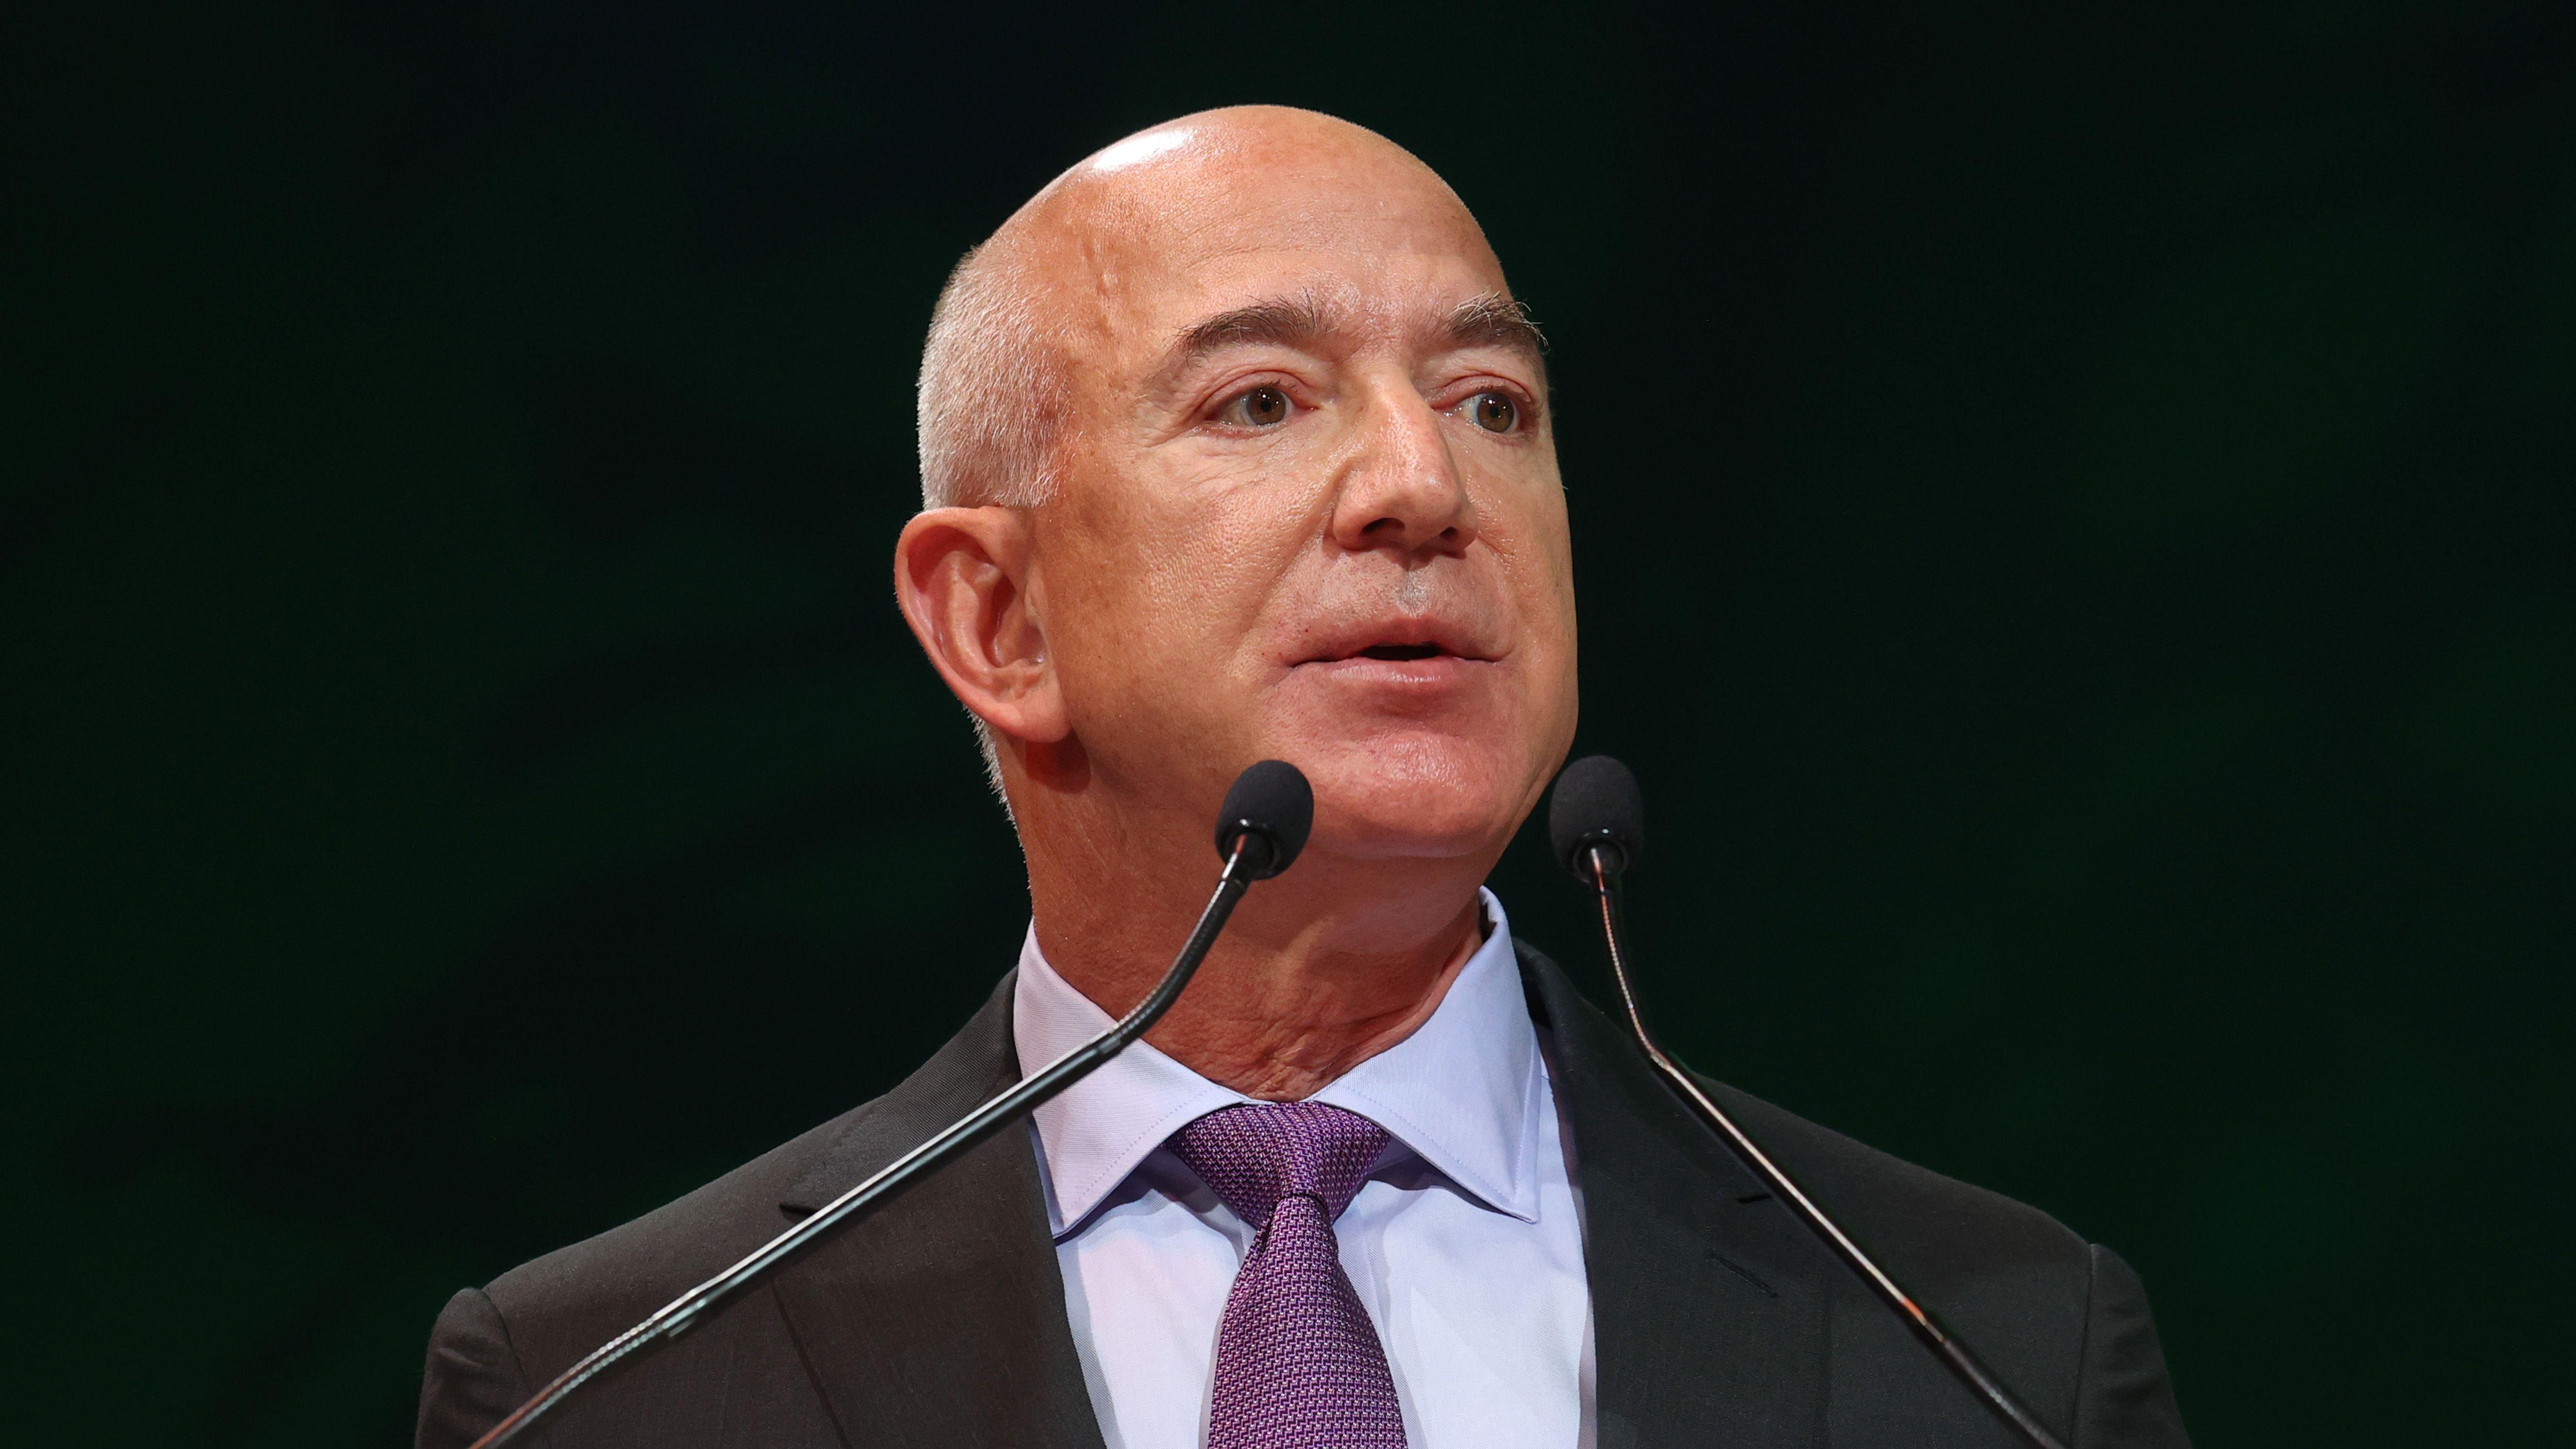 Amazon founder Jeff Bezos delivers a speech